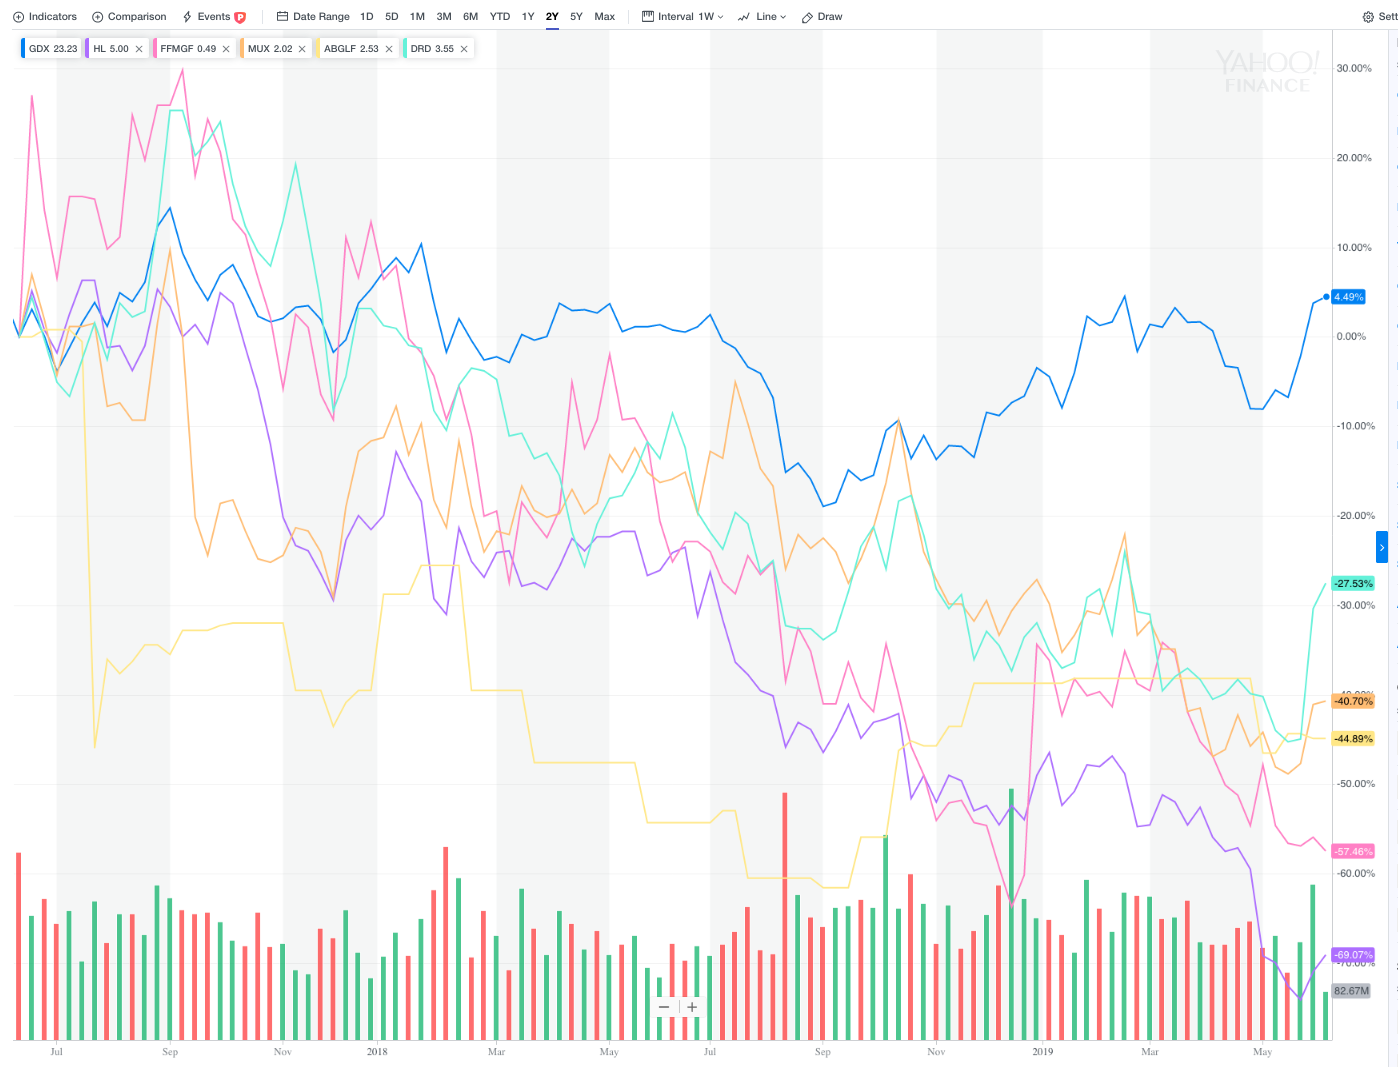 Gold Stock Performance Chart